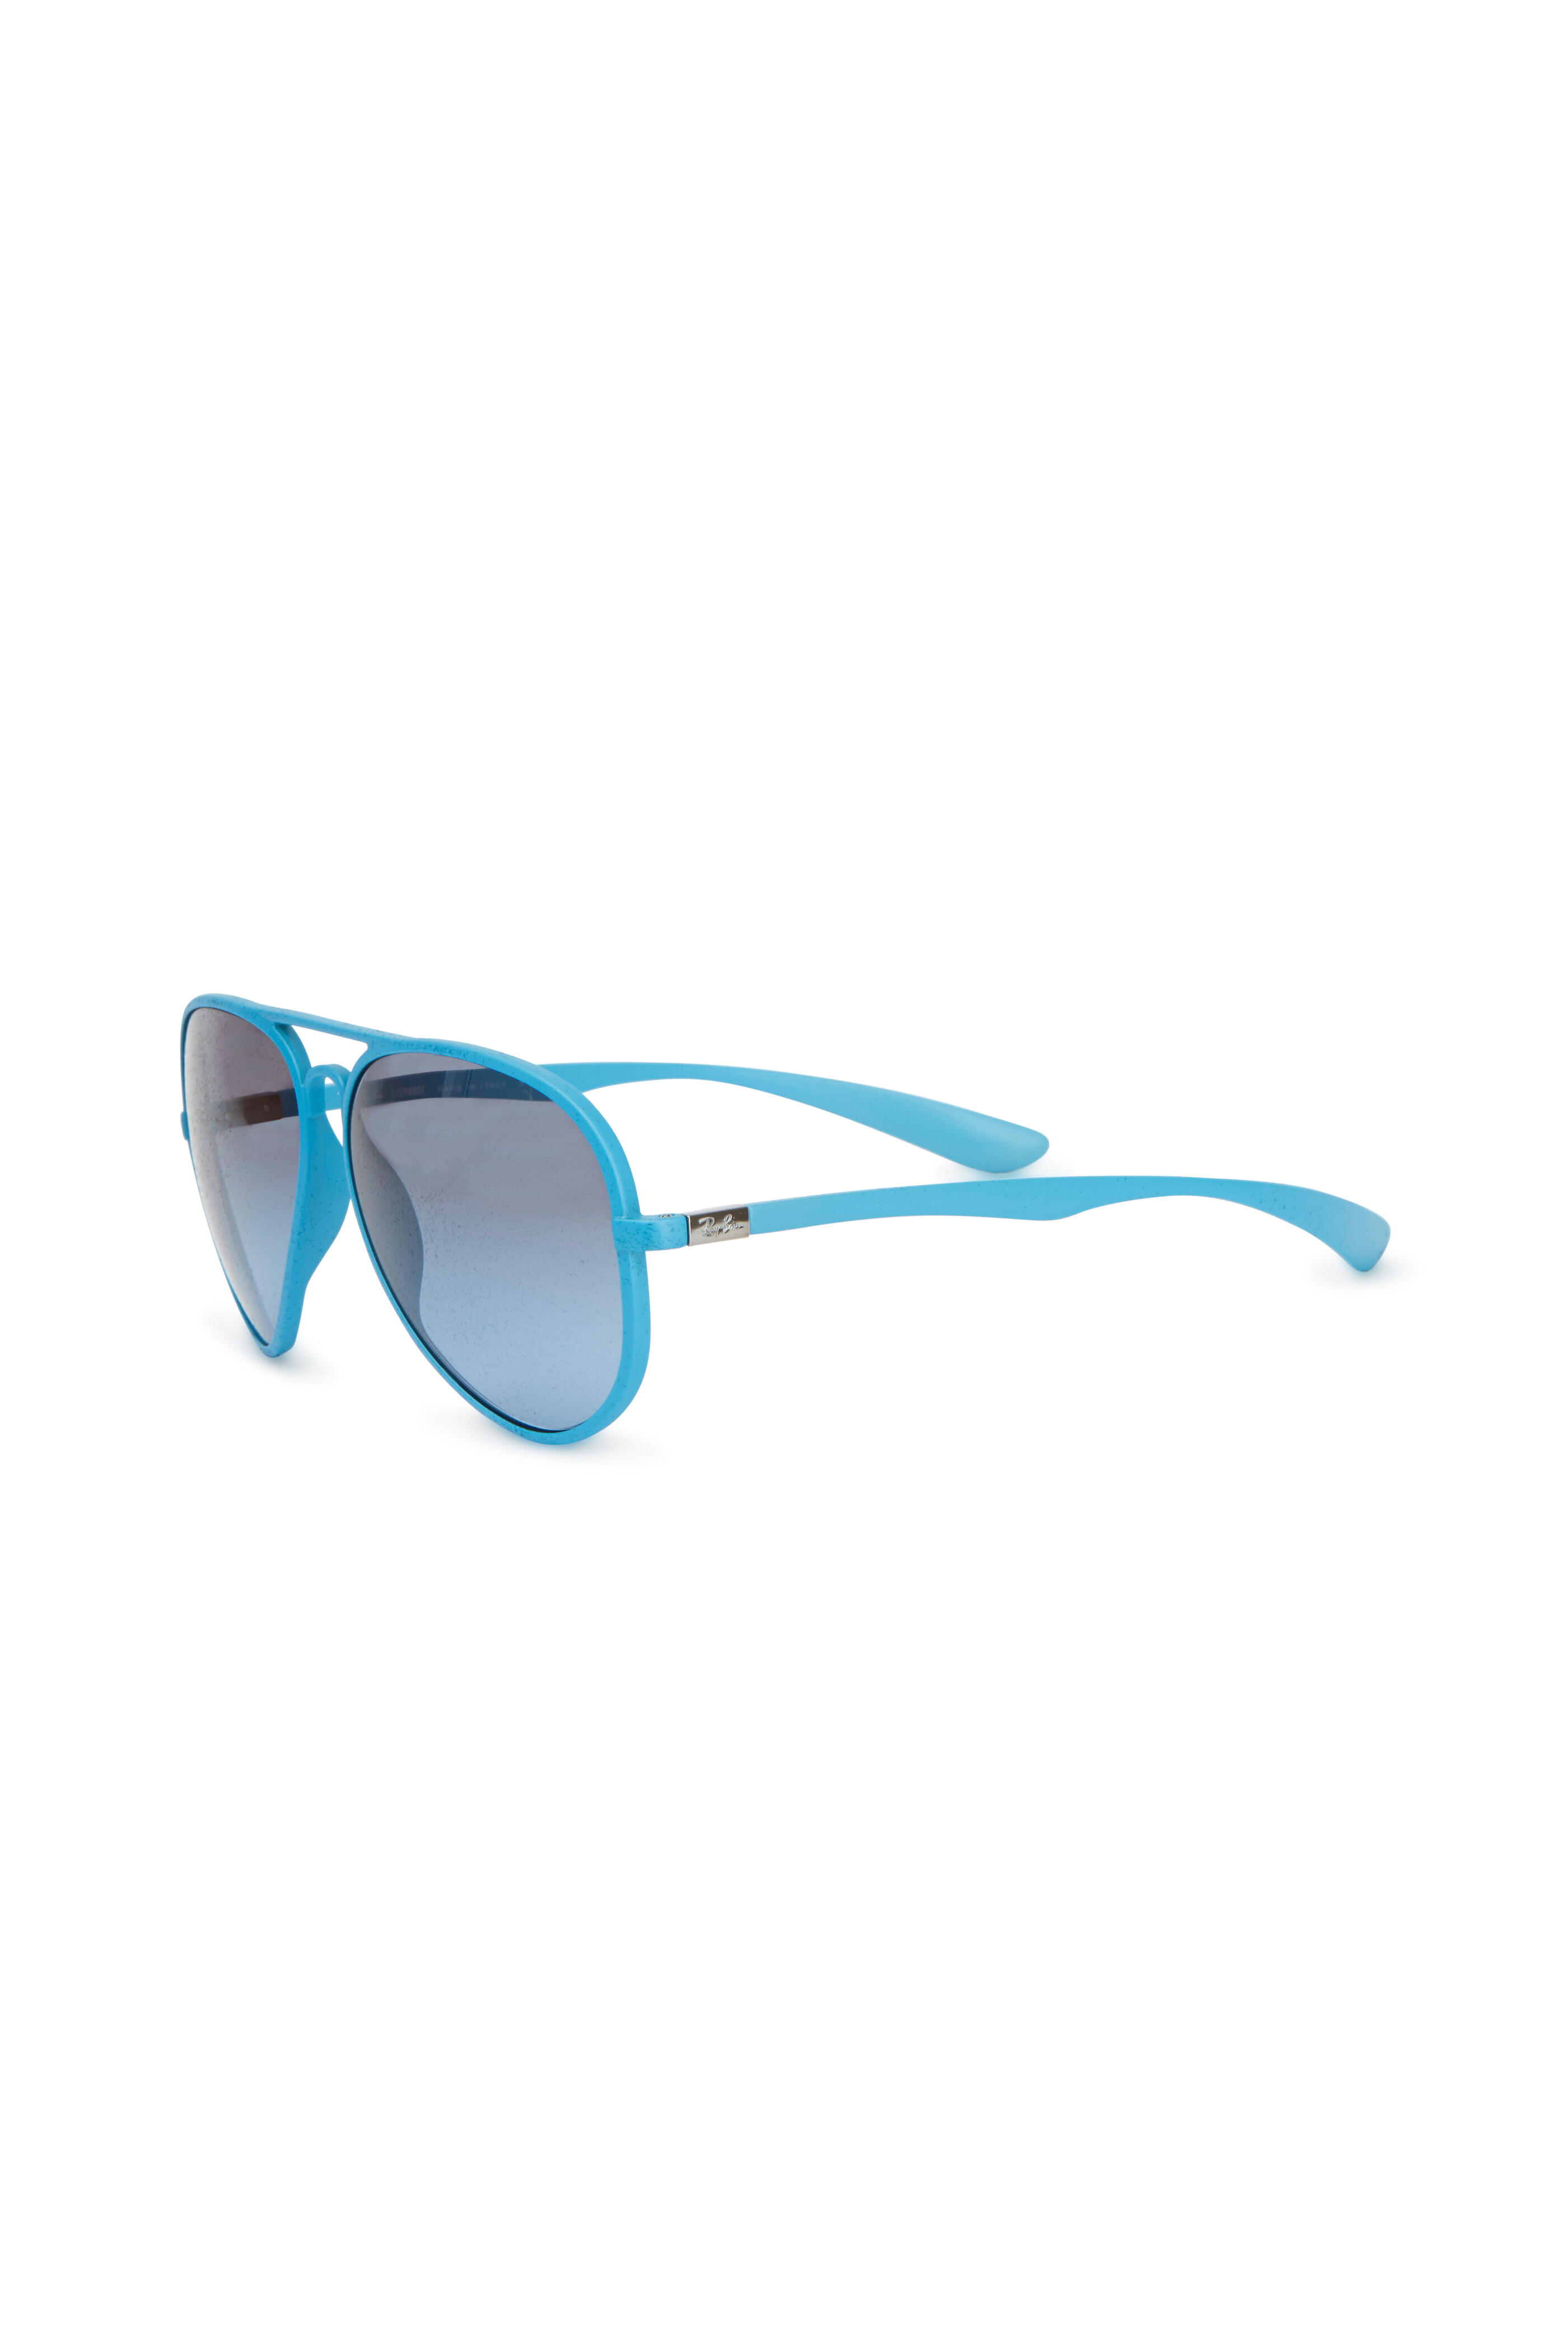 Ray Ban Liteforce Aviator Tech Blue Sunglasses